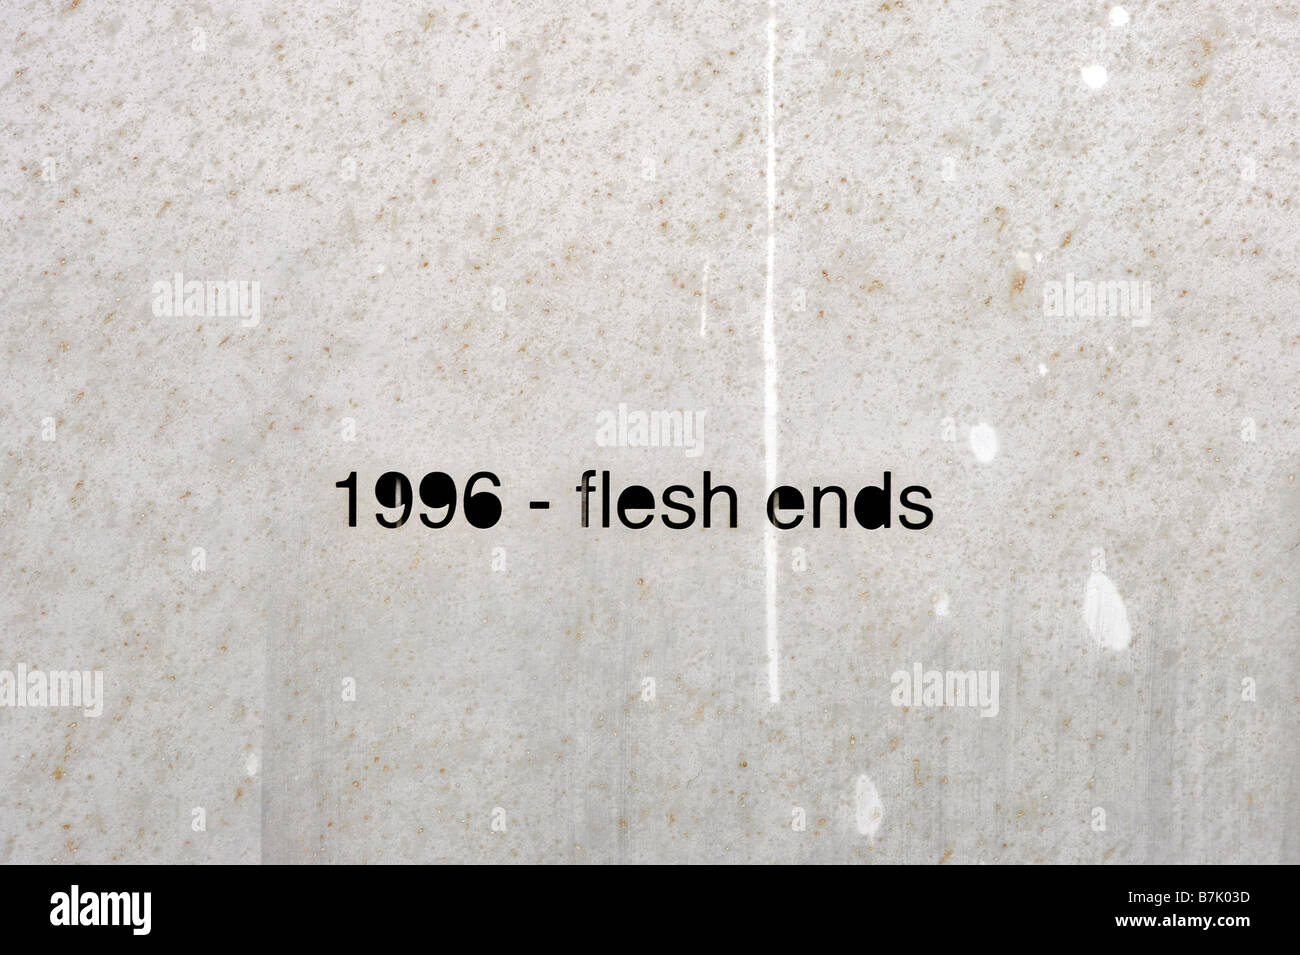 flesh ends metal hacienda memorial plaque factory records nightclub manchester uk england 1996 Stock Photo